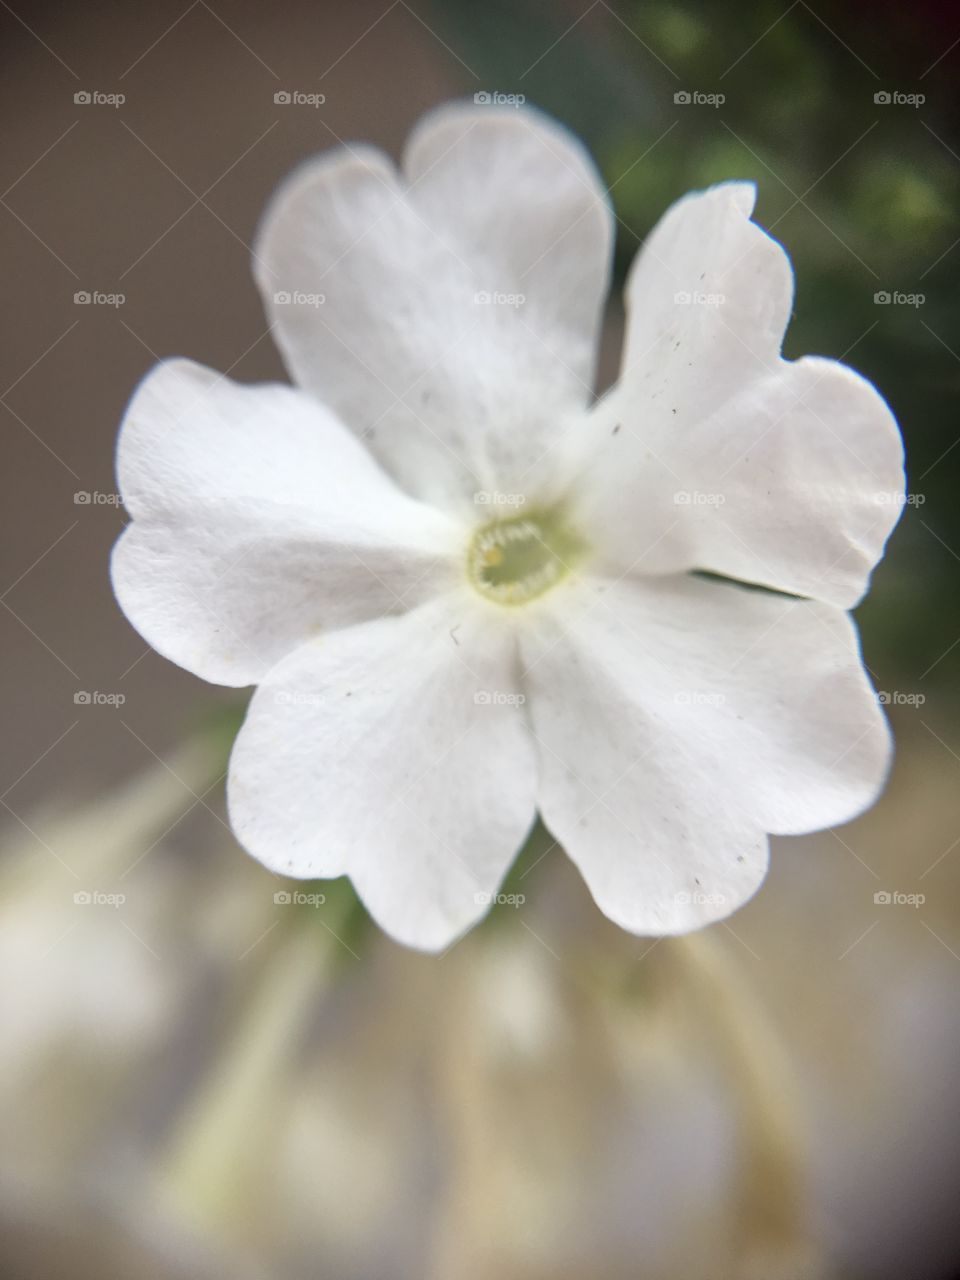 Simple tiny white flower